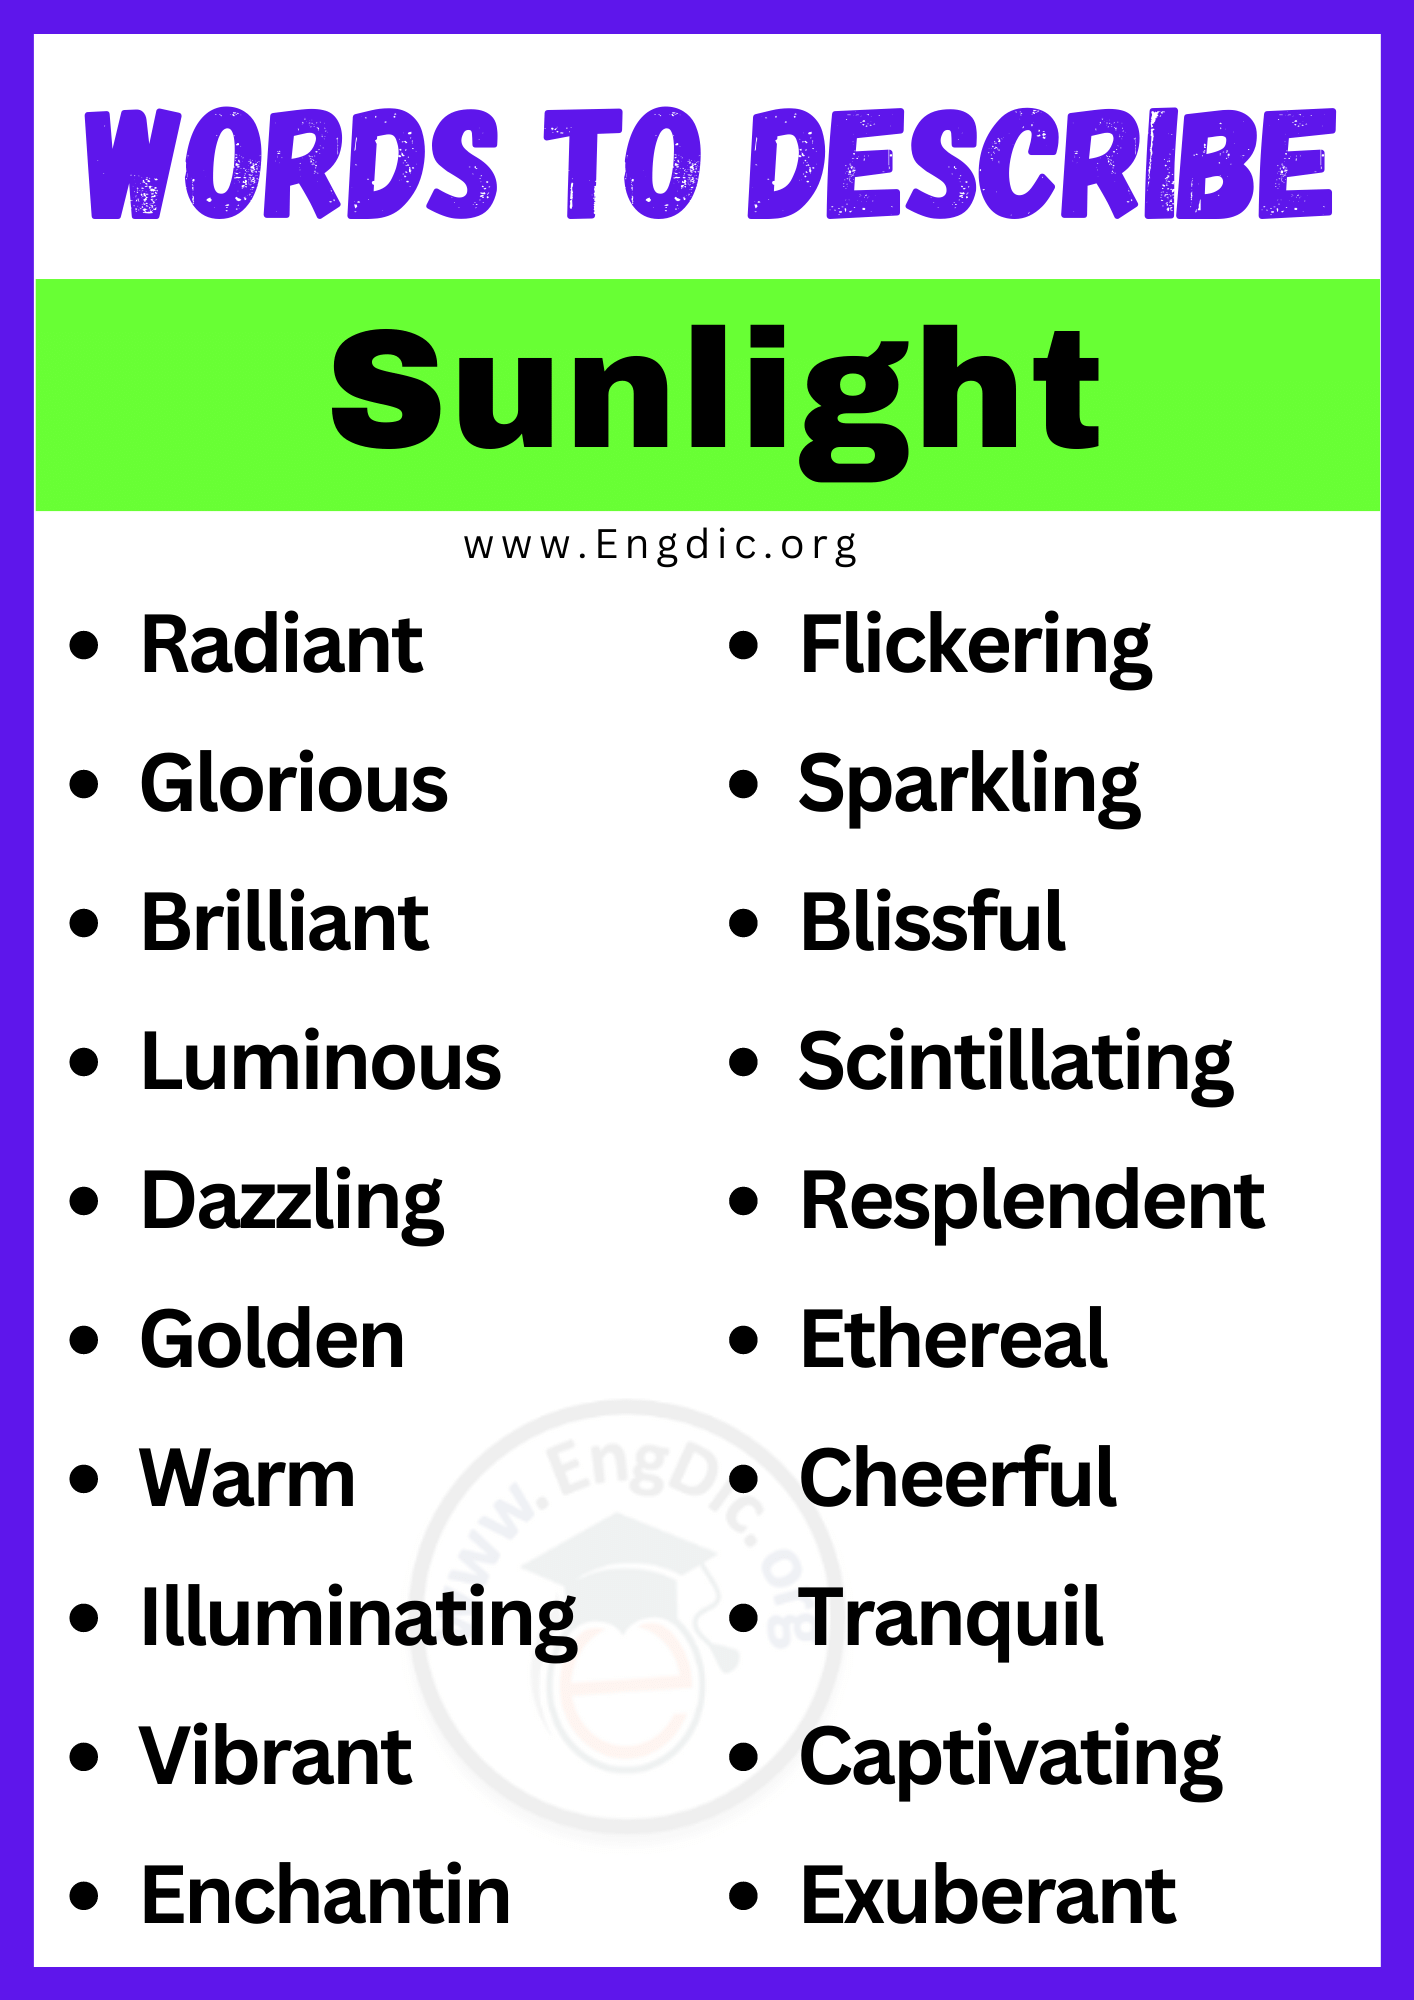 Words to Describe Sunlight